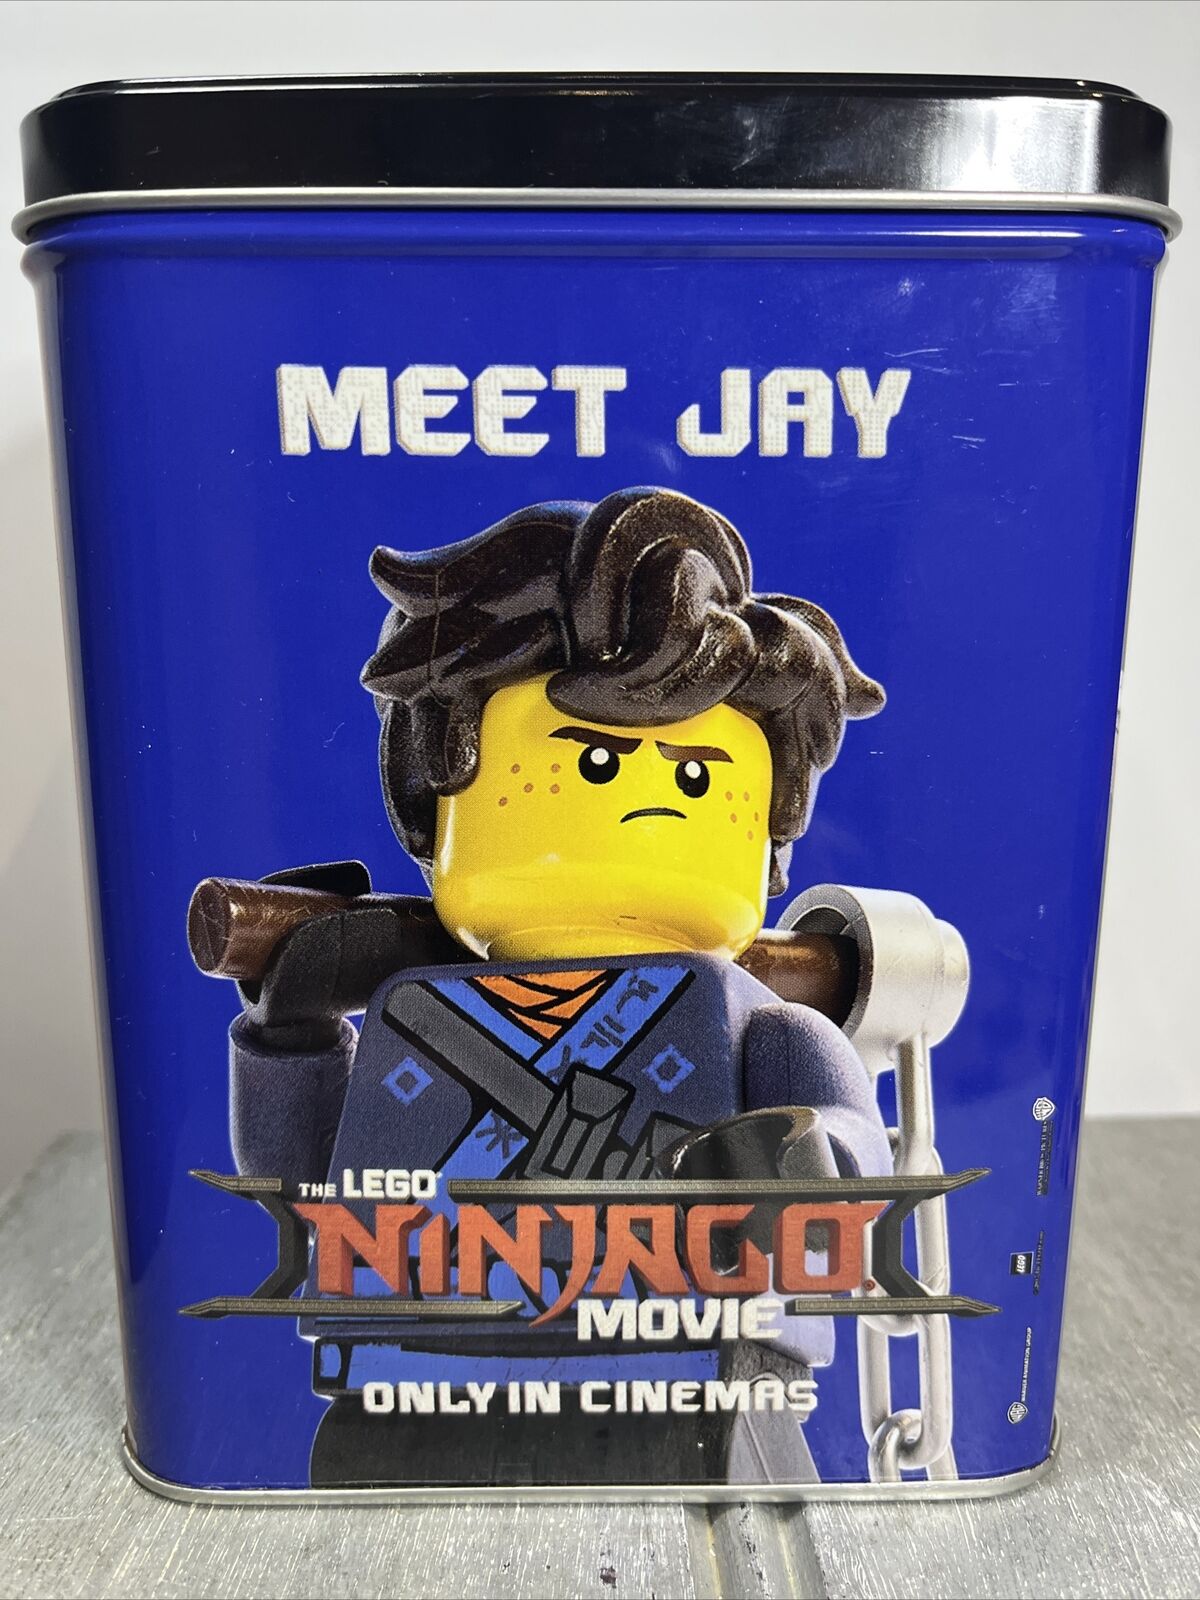 The Lego Ninjago Movie EMPTY Collectible Tin Storage Container Display Decor